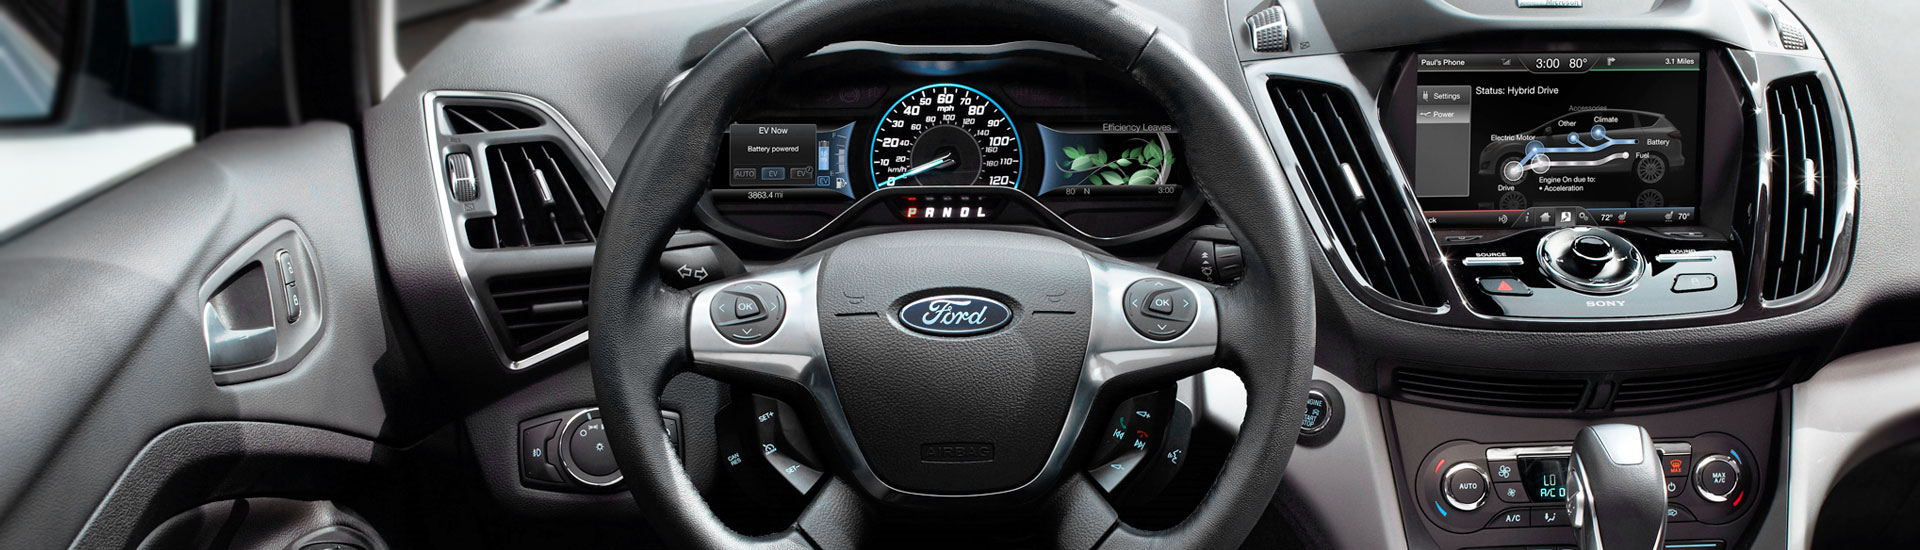 Ford C-Max Custom Dash Kits